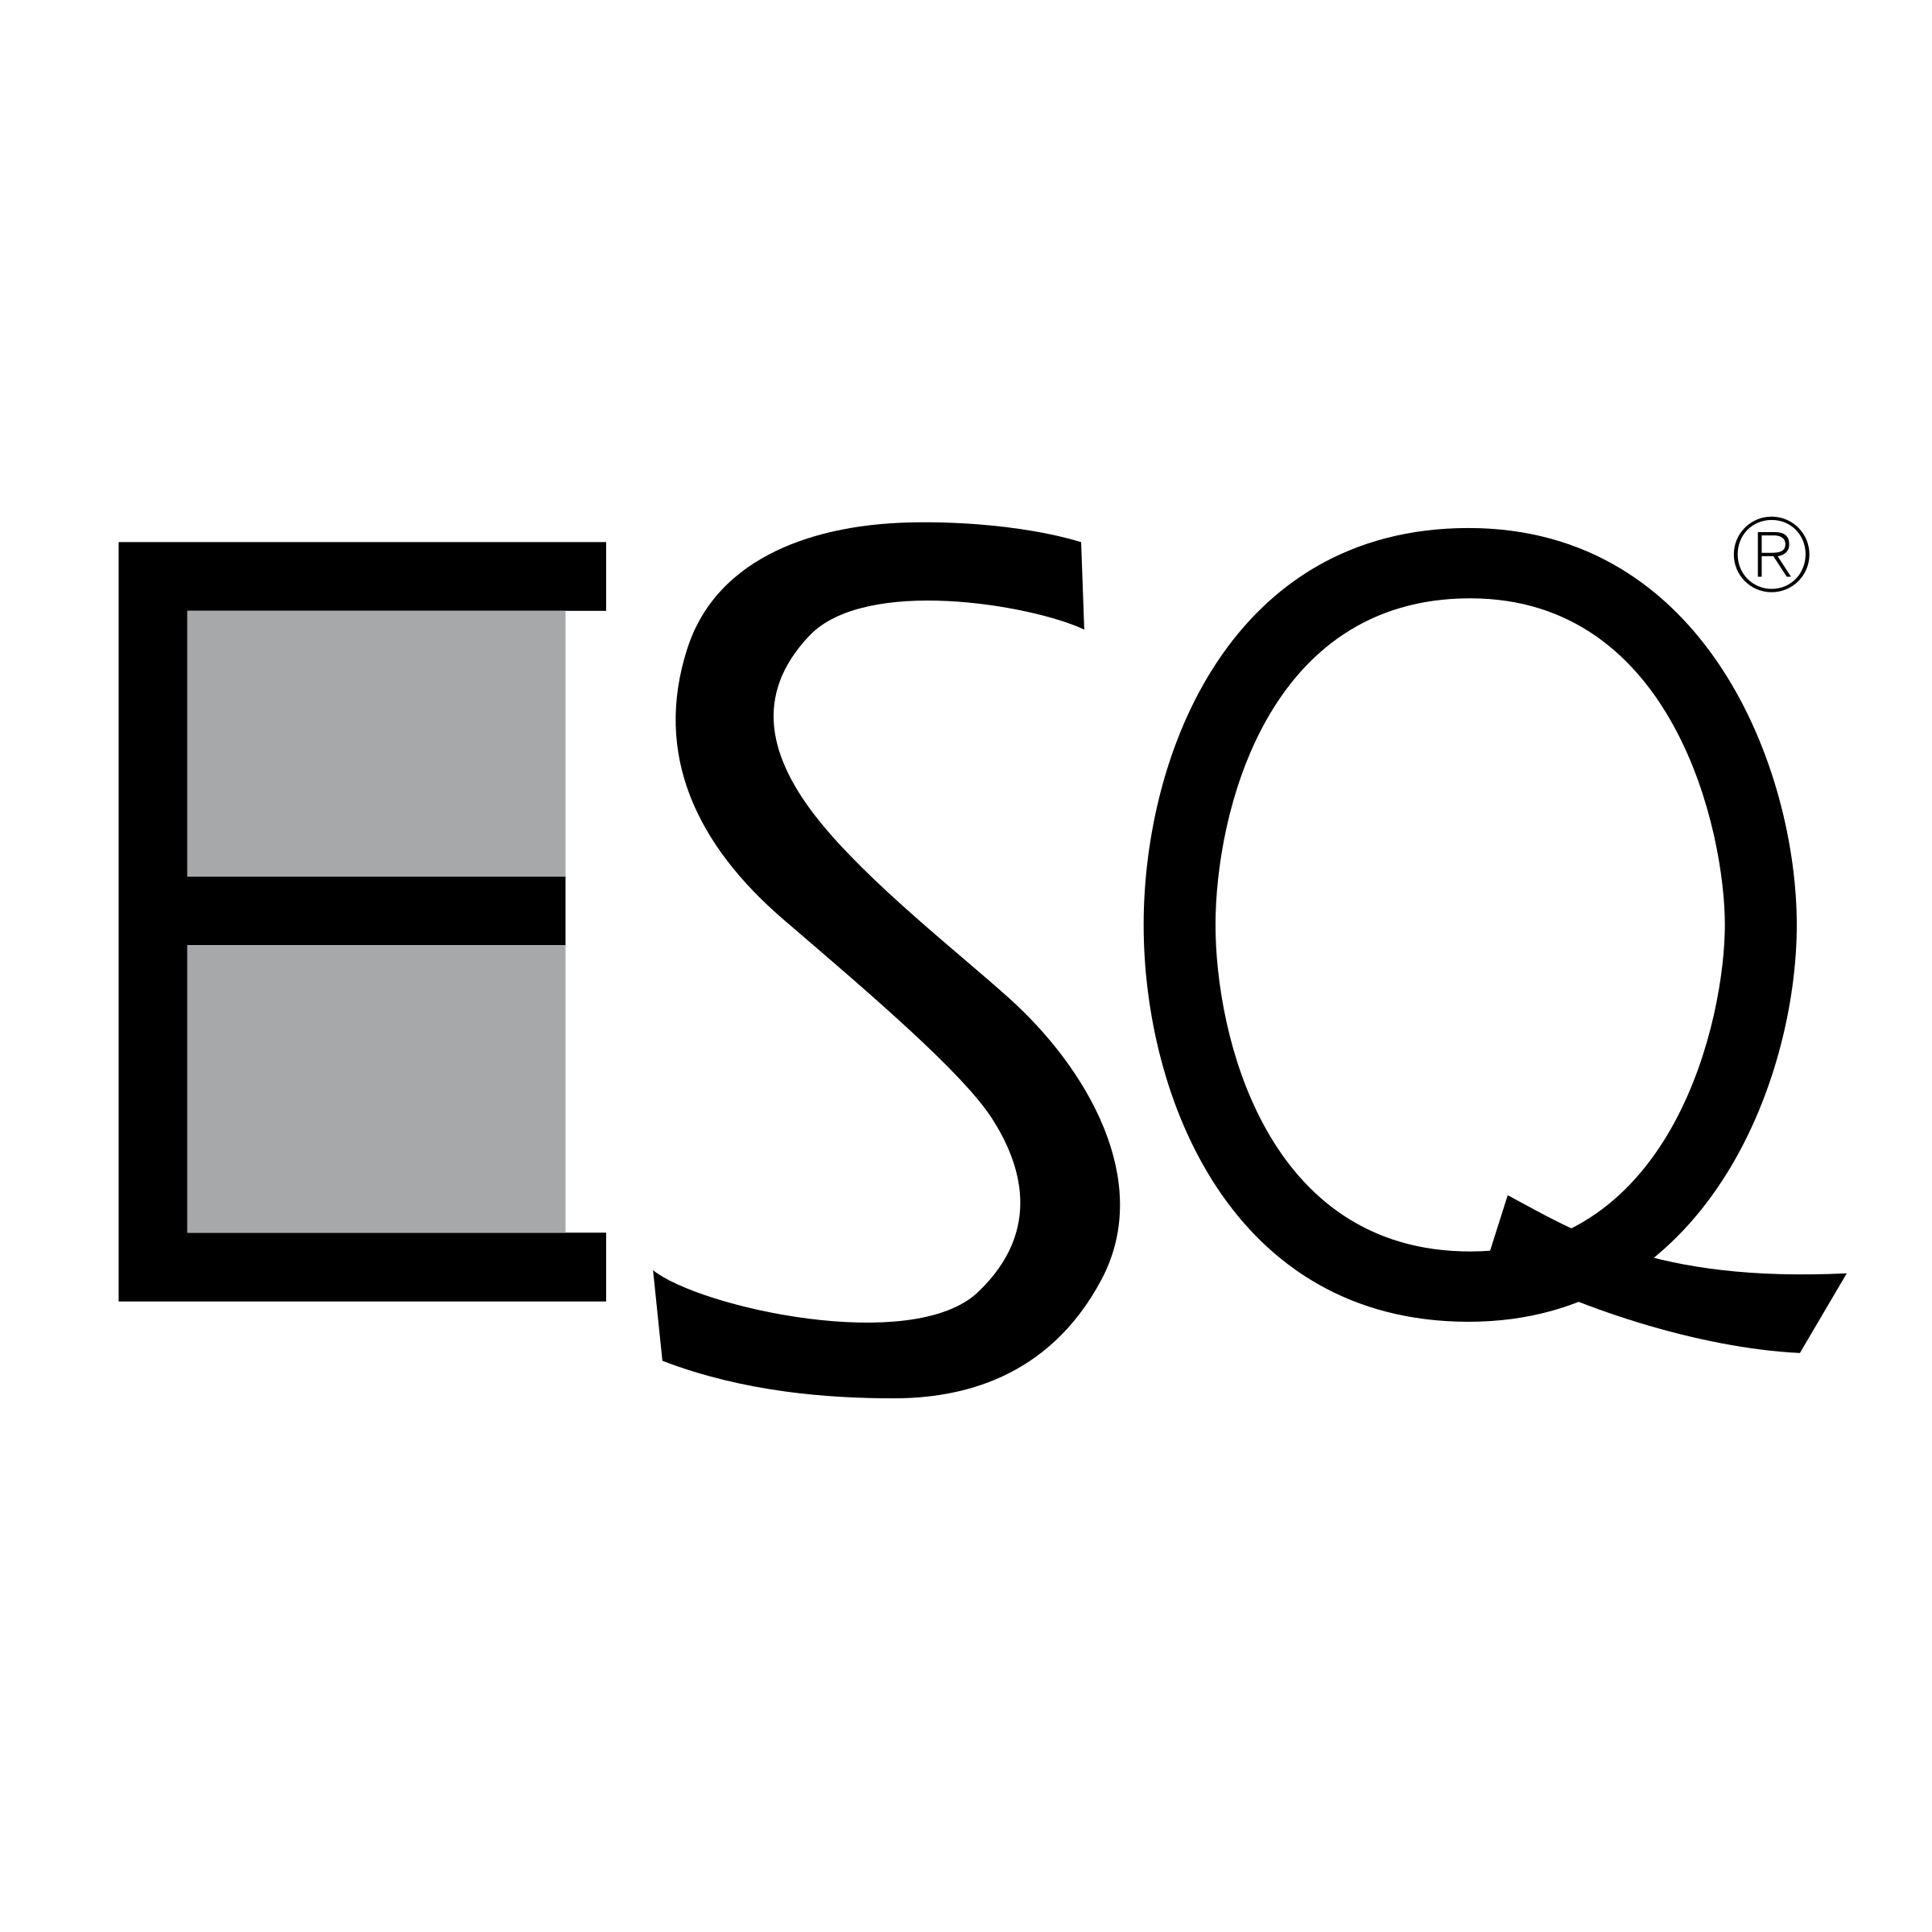 Esq Logo - ESQ Logo PNG Transparent & SVG Vector - Freebie Supply